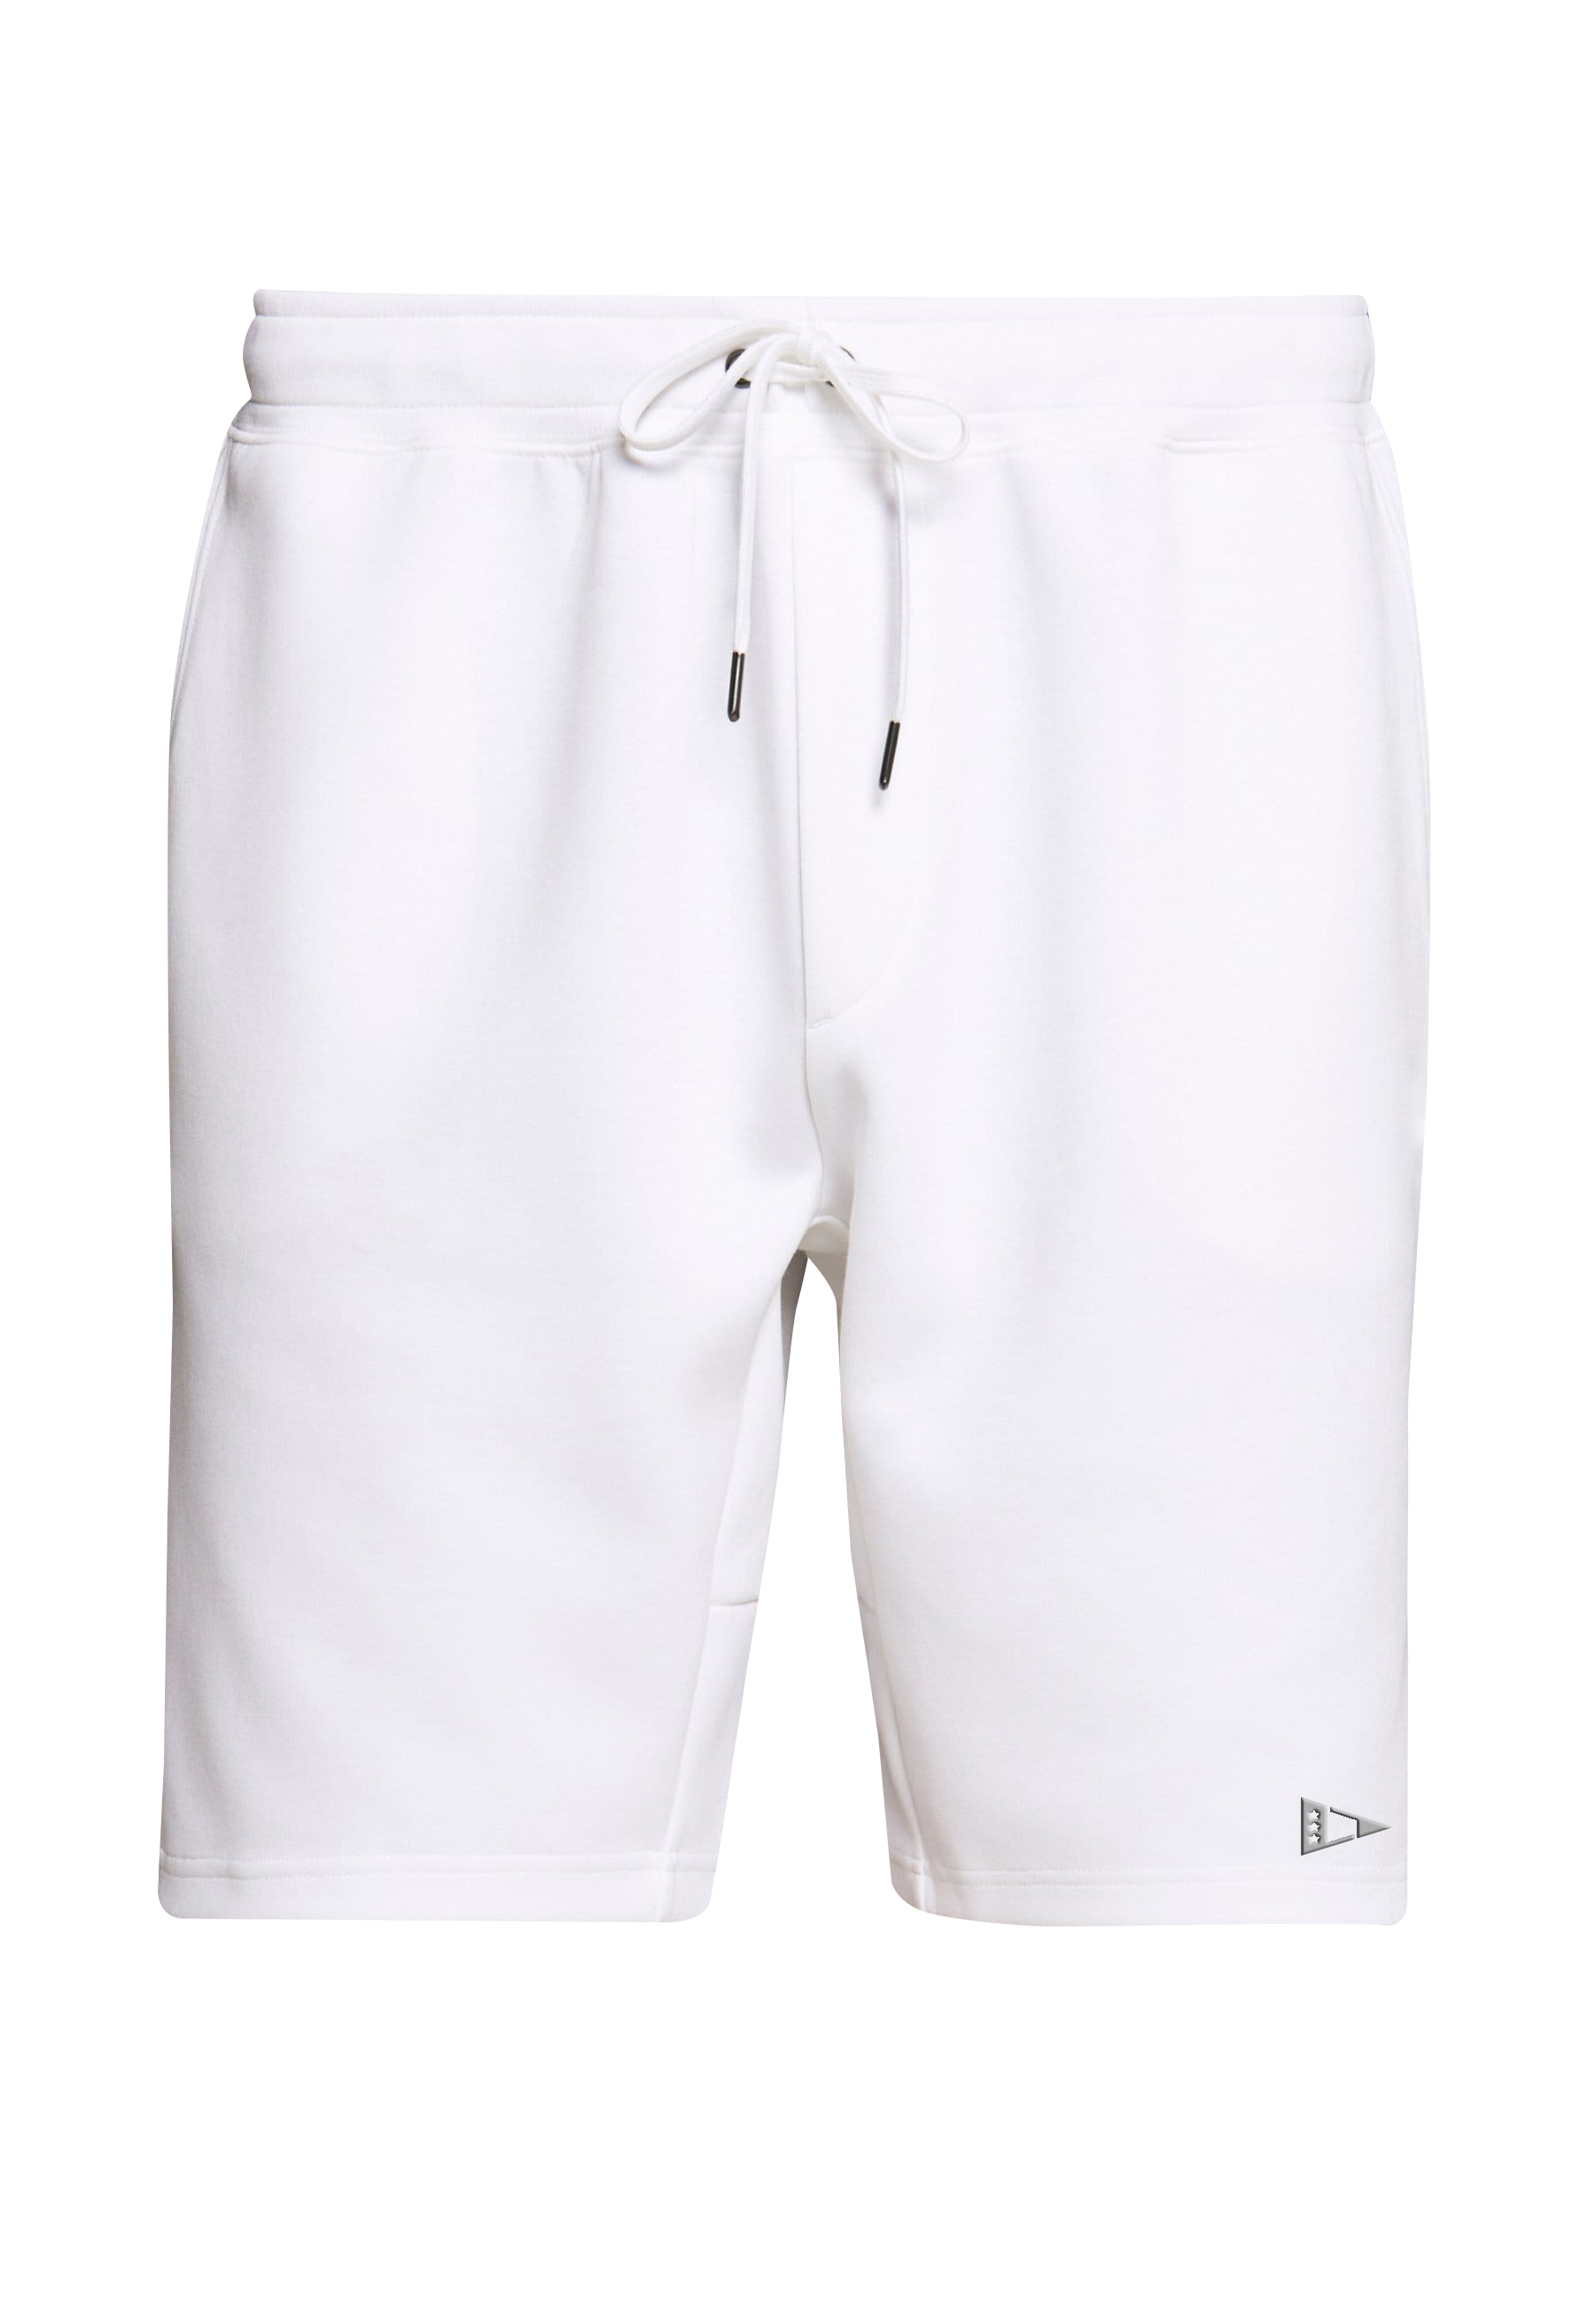 Спортивные шорты мужские Scuola Nautica Italiana 018510 белые M